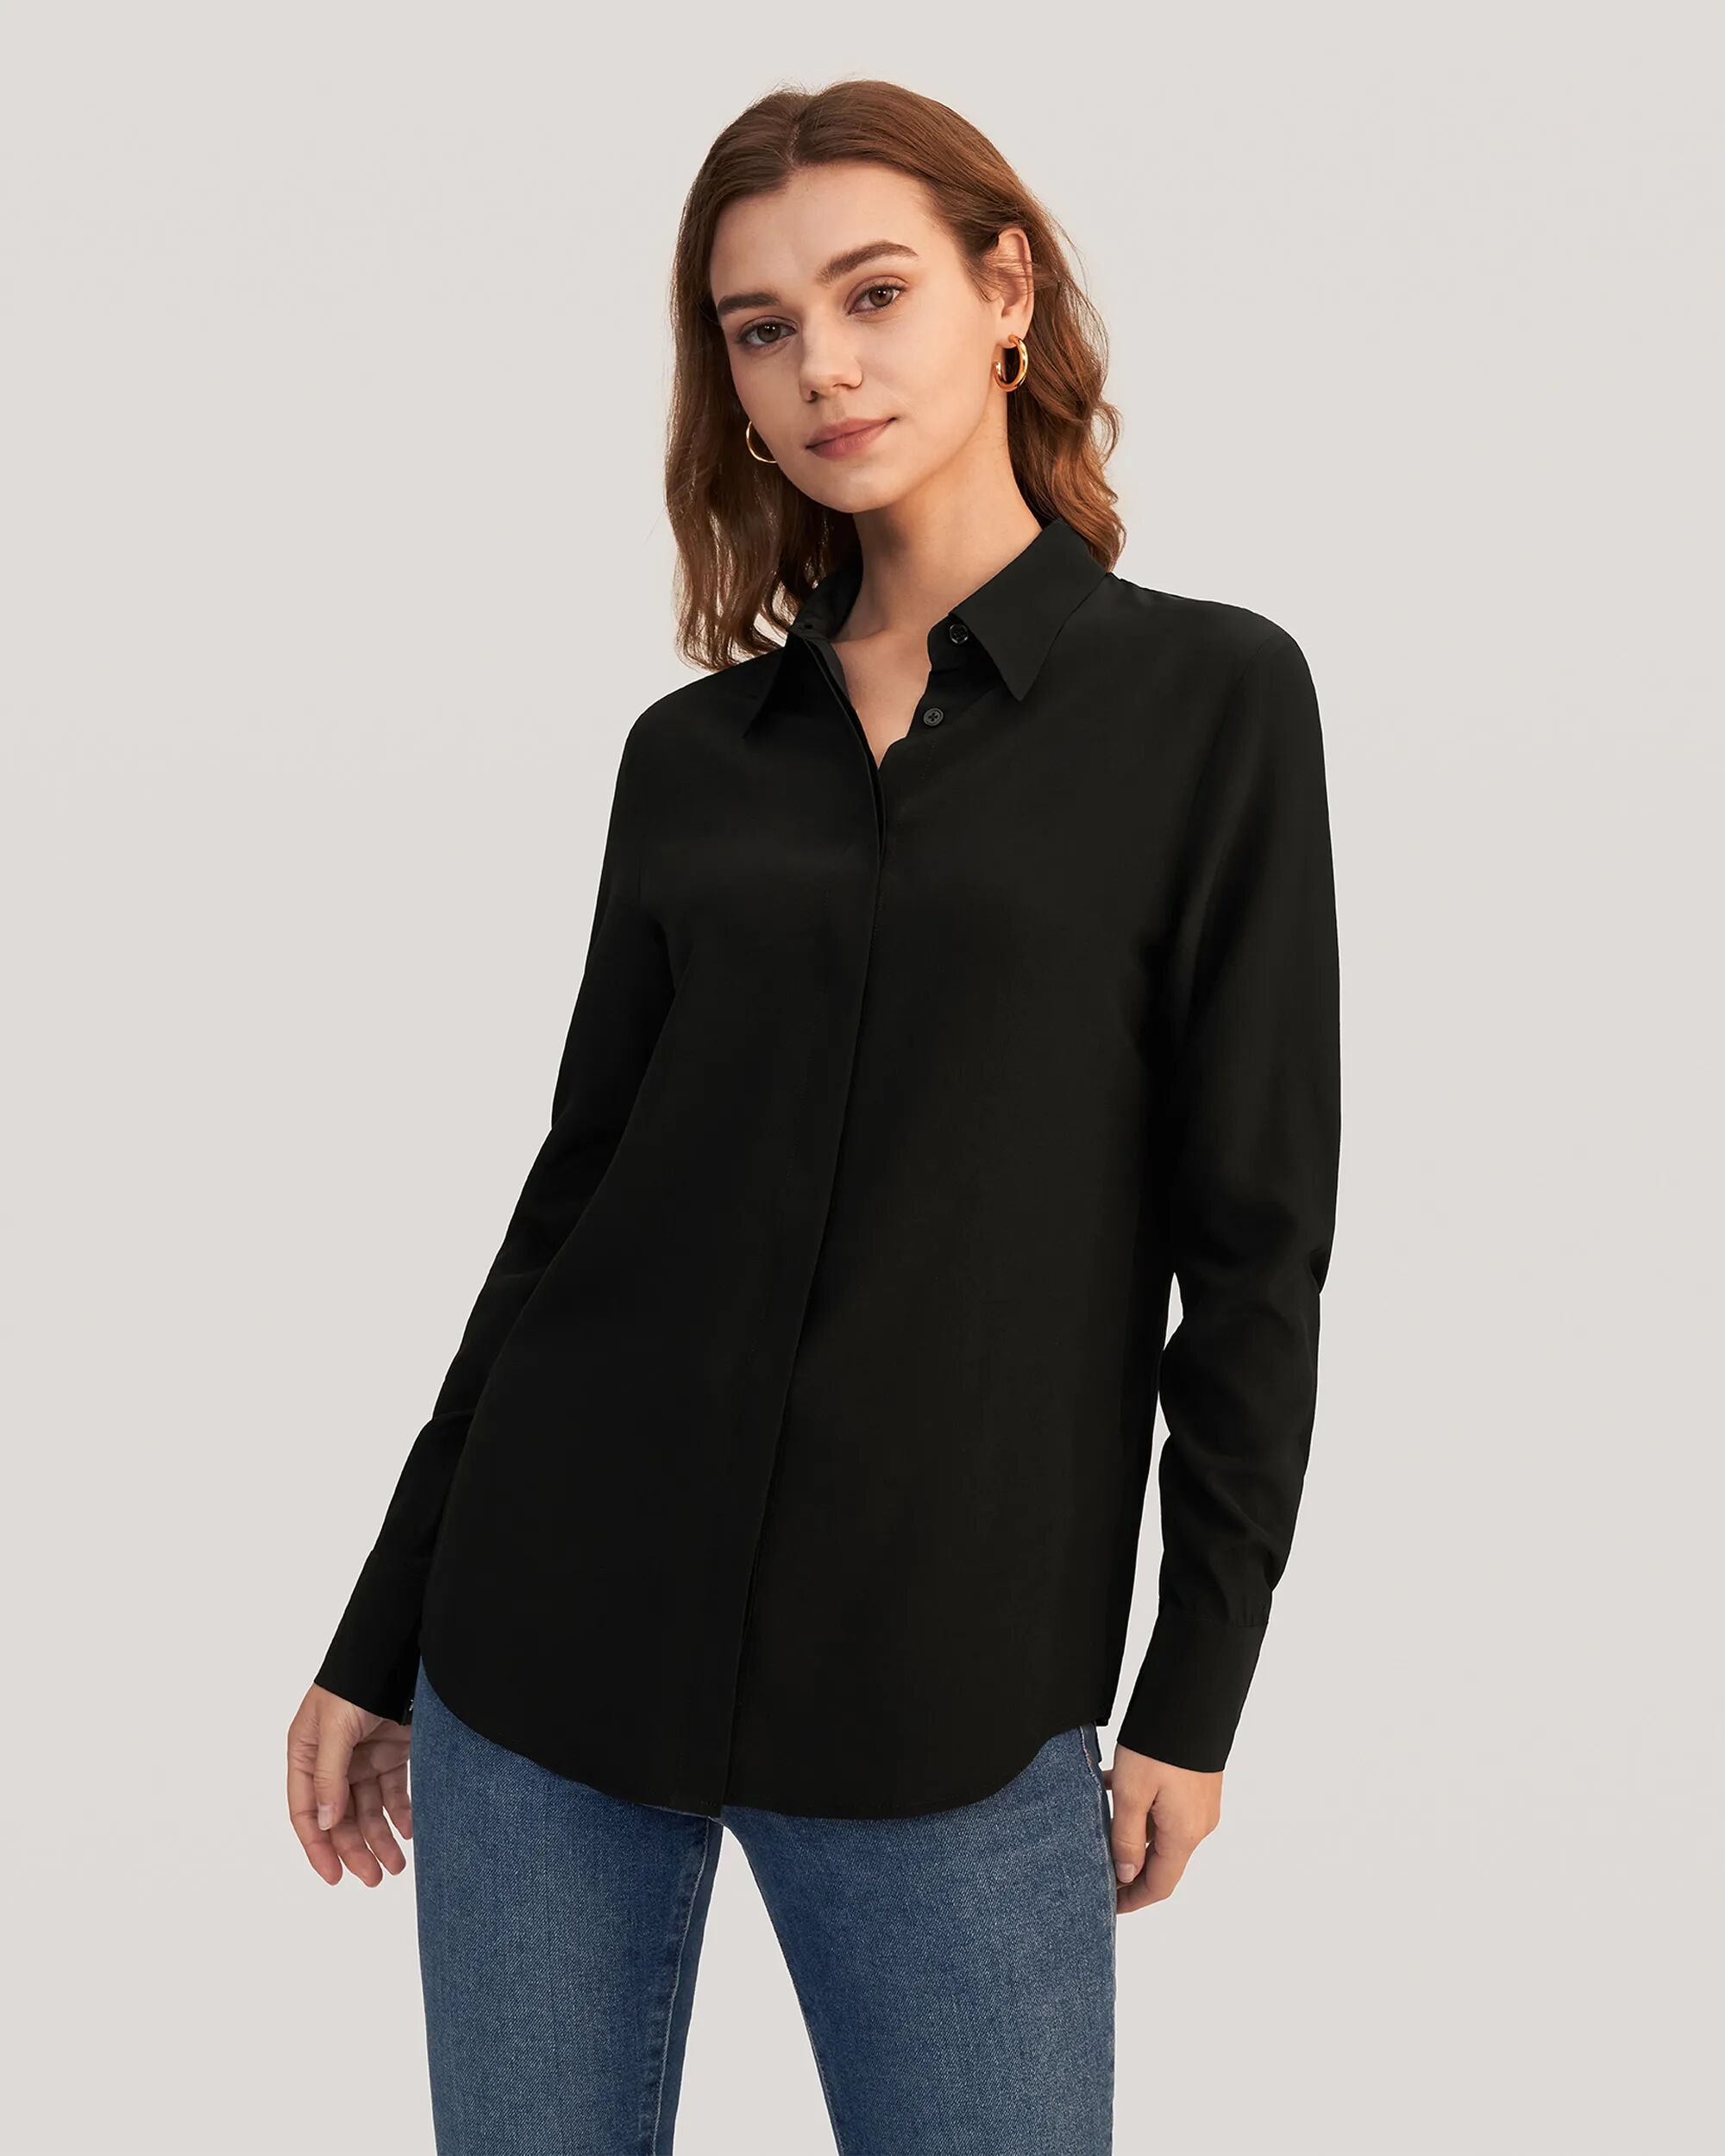 LILYSILK Business Black Shirt   Silk Plain Long Sleeves Style   Blouse For Women 100% Grade 6A Crepe De Chine Skin-Friendly Breathable M